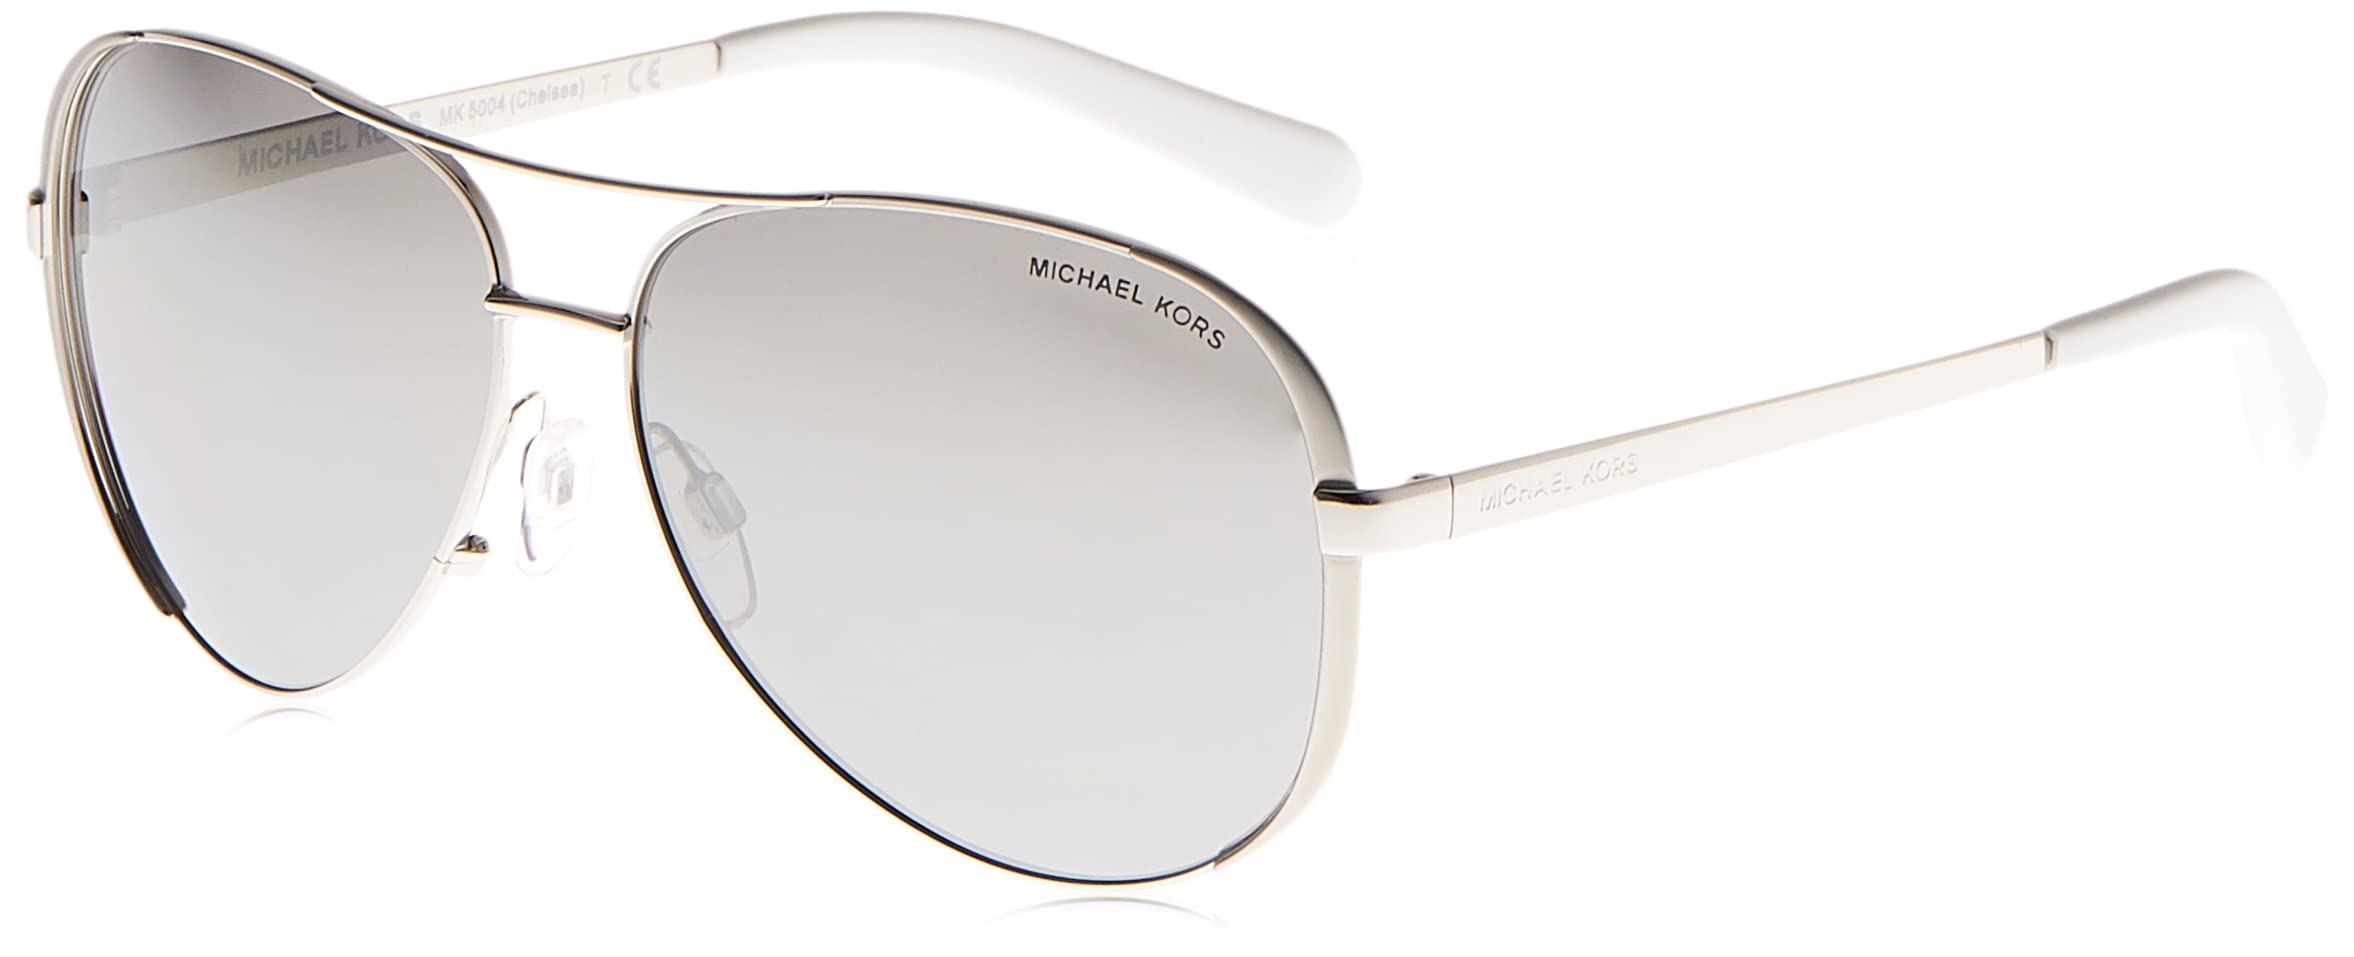 Michael Kors MK5004 Chelsea Aviator Sunglasses Rose Gold wTaupe Mirror New   eBay